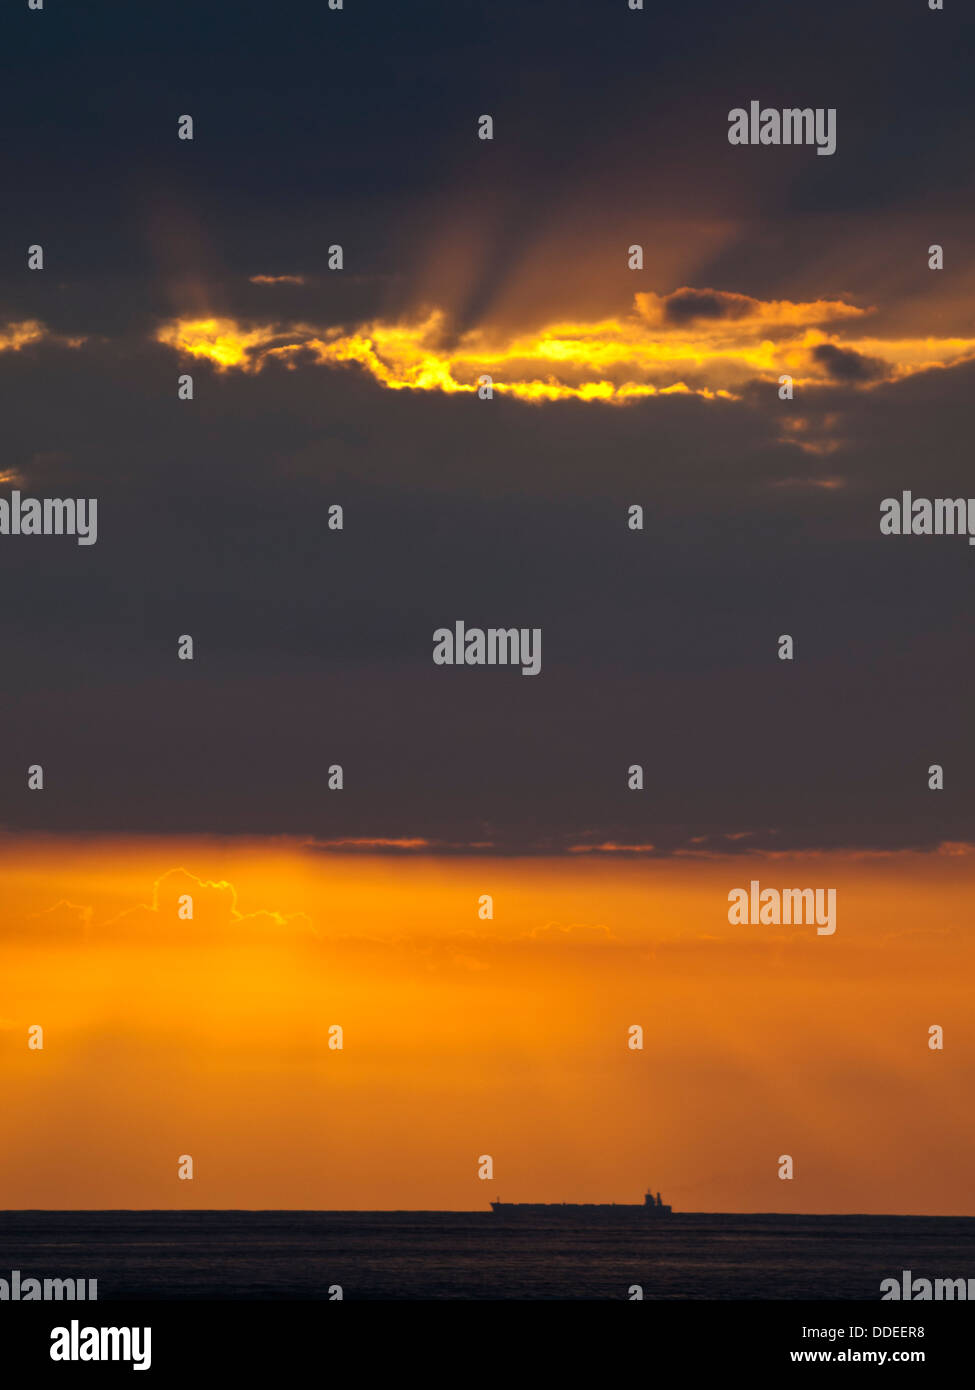 Carguero silueta en la línea del horizonte con luz naranja atardecer Foto de stock